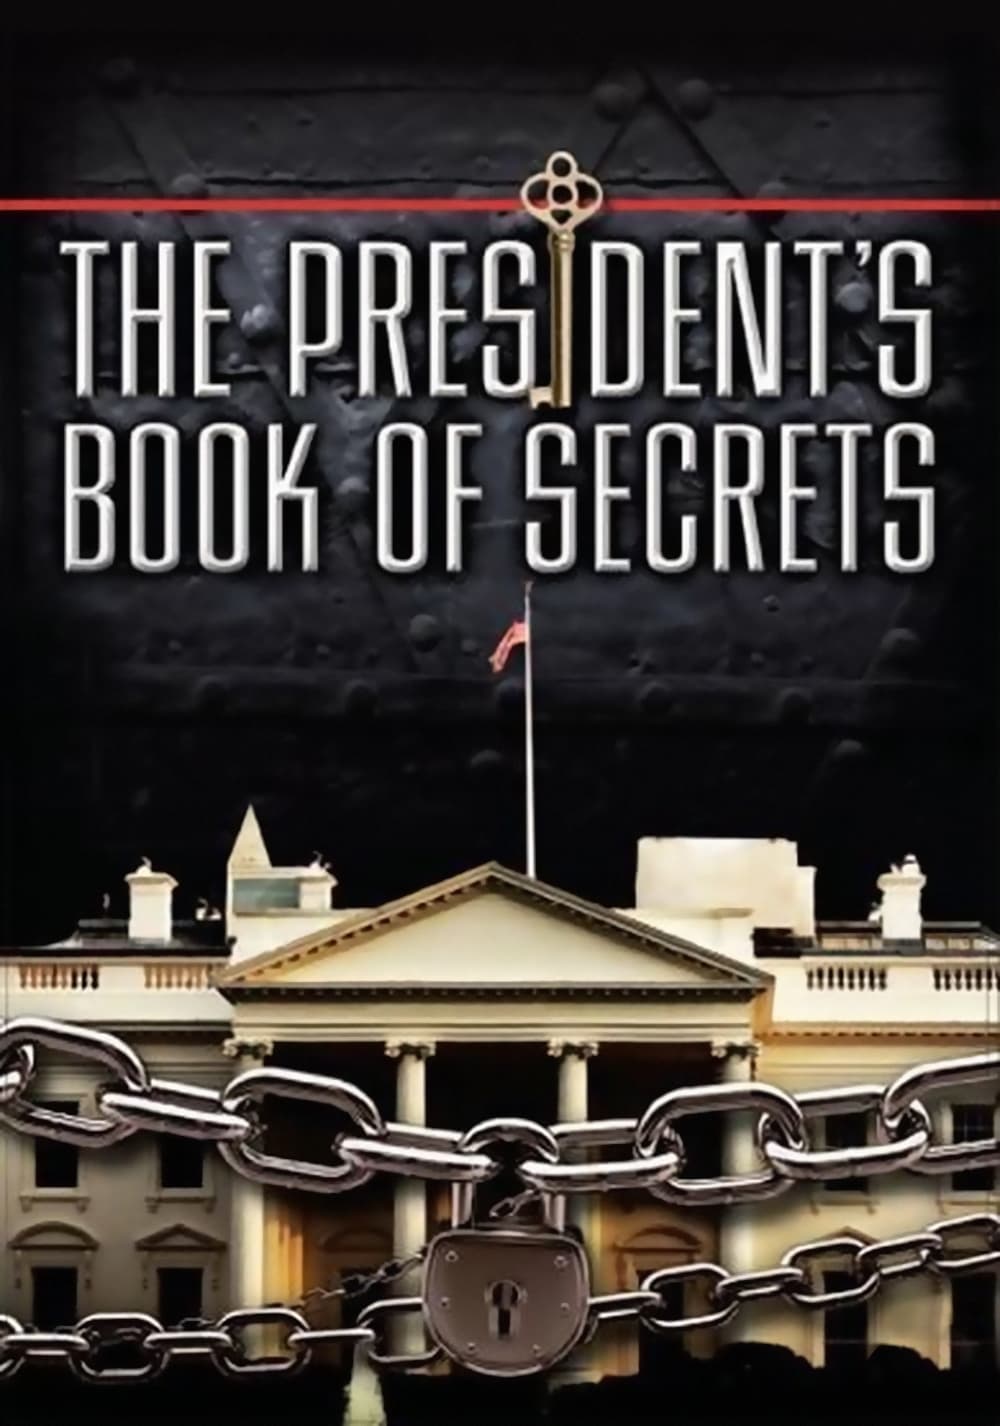 The President's Book of Secrets (2010)